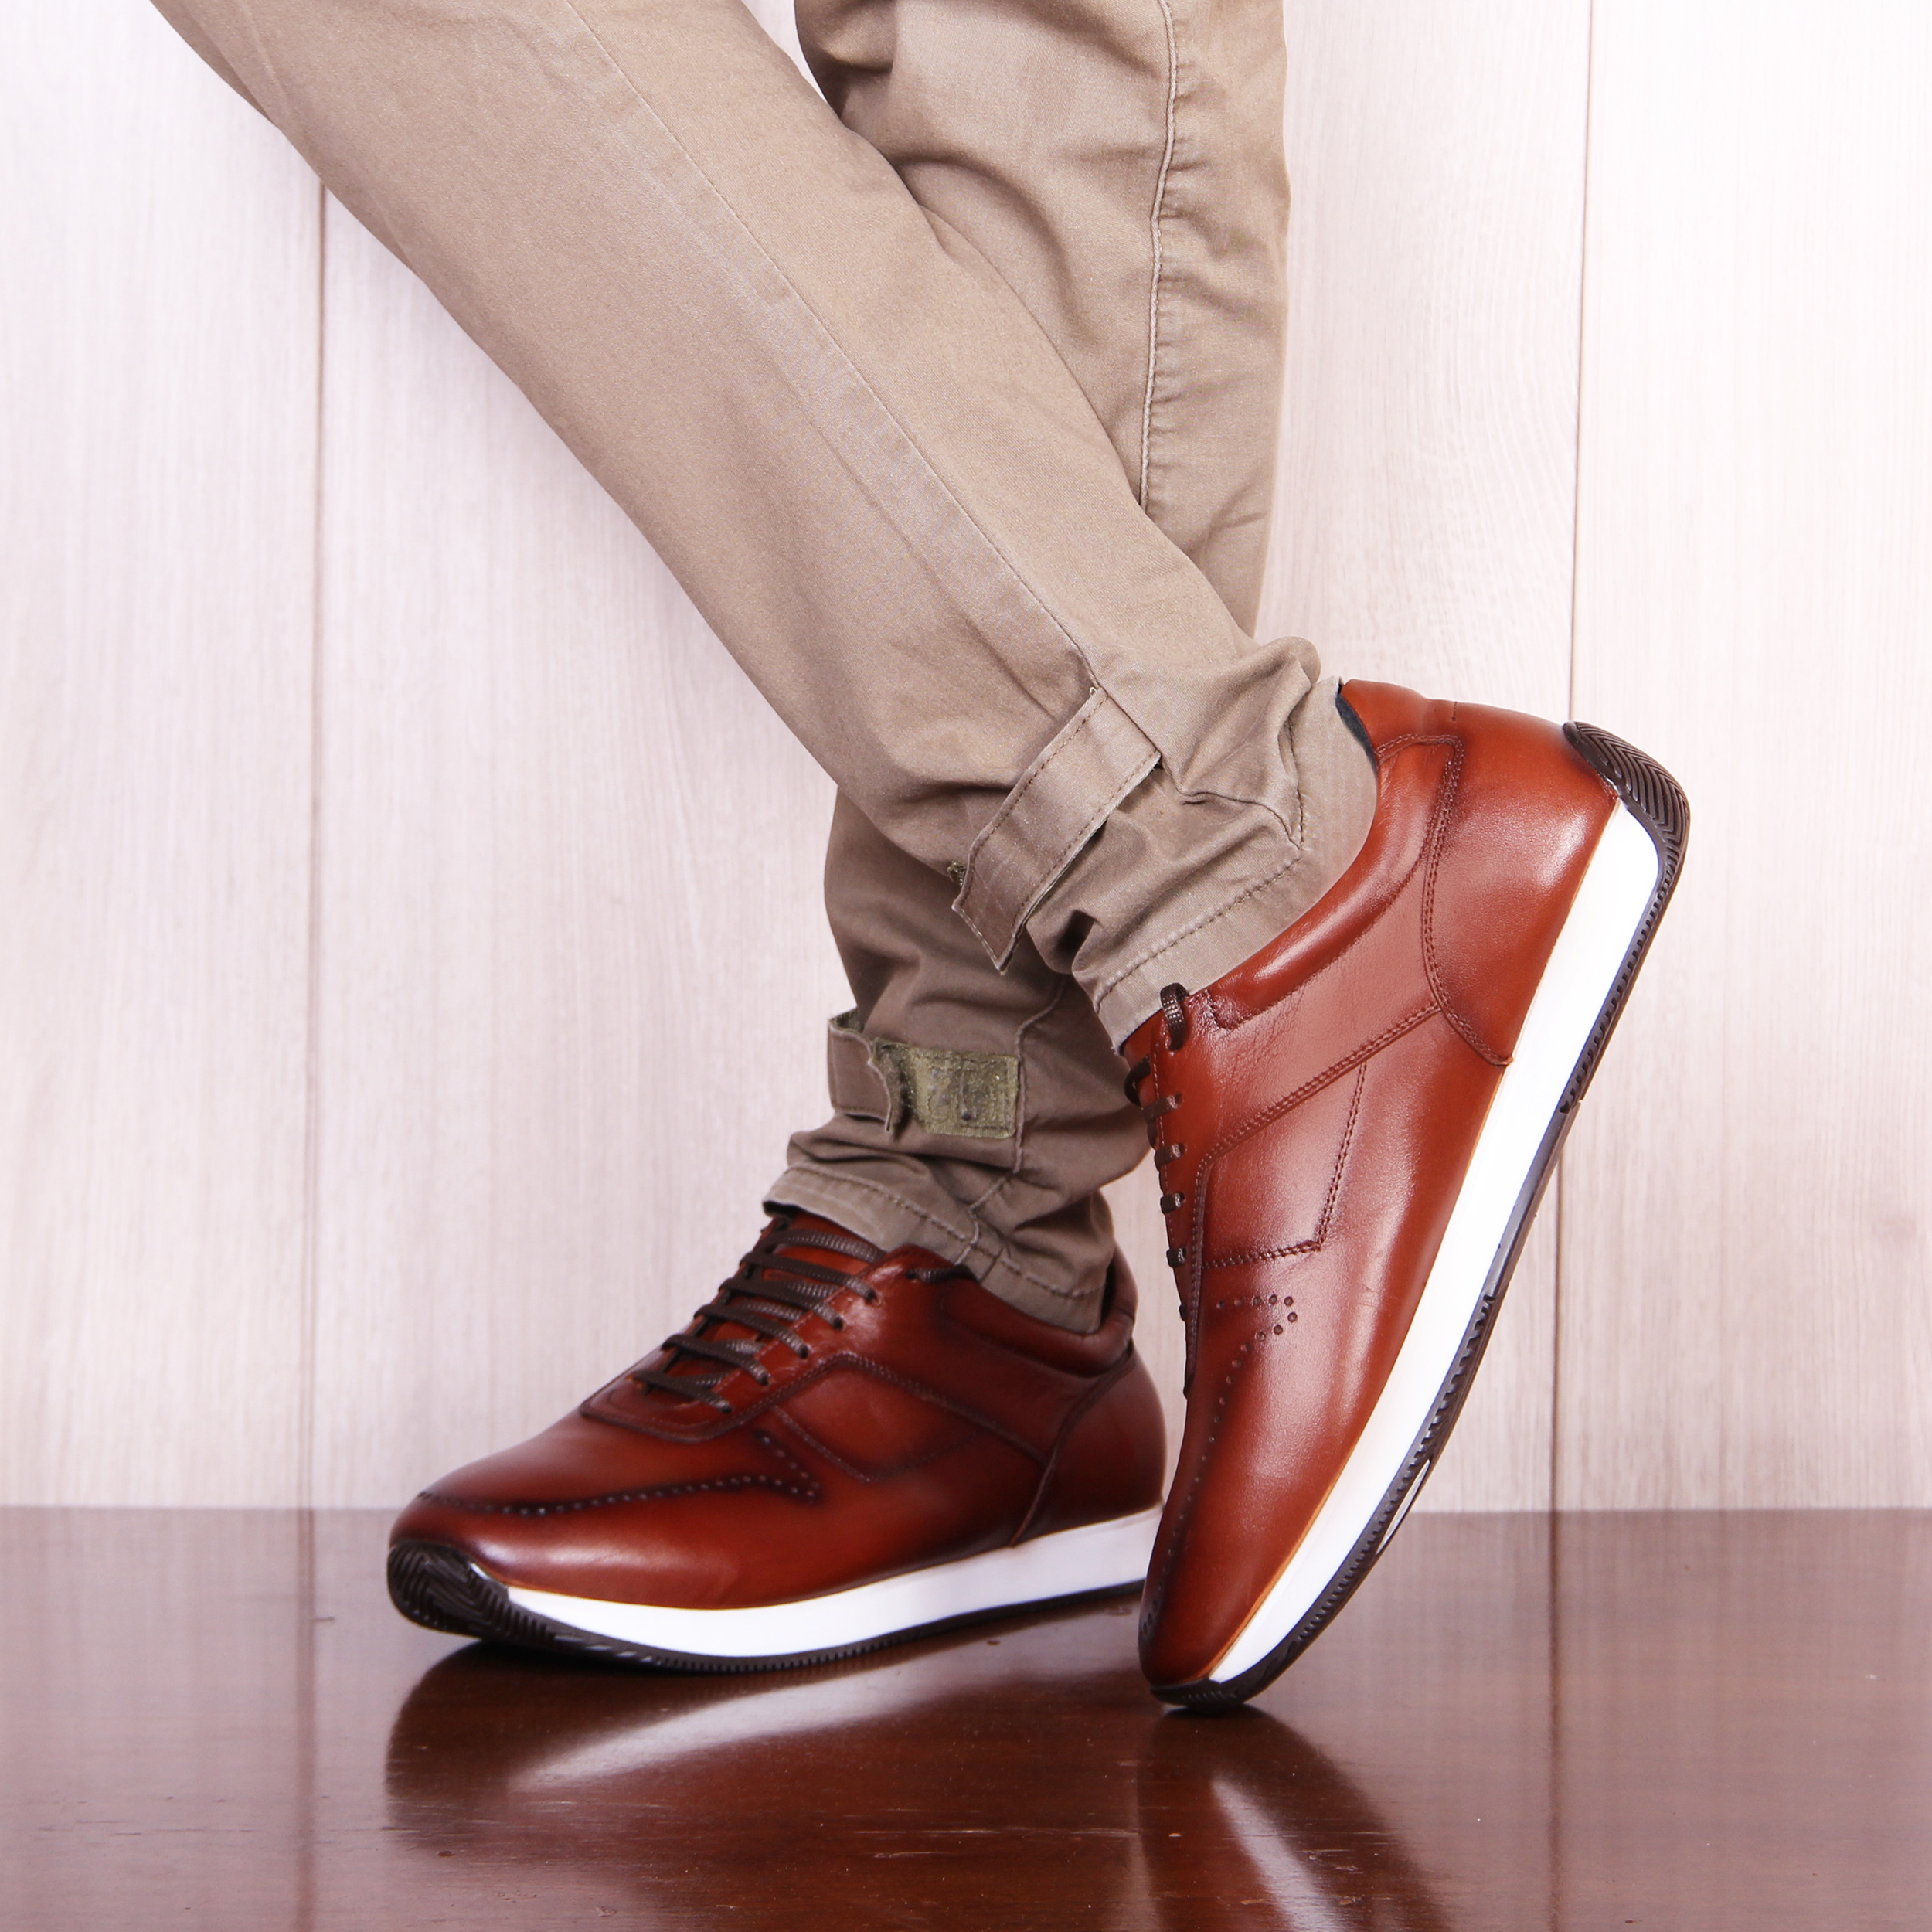 SHAHRECHARM leather men's casual shoes ,GH5003-5 Model